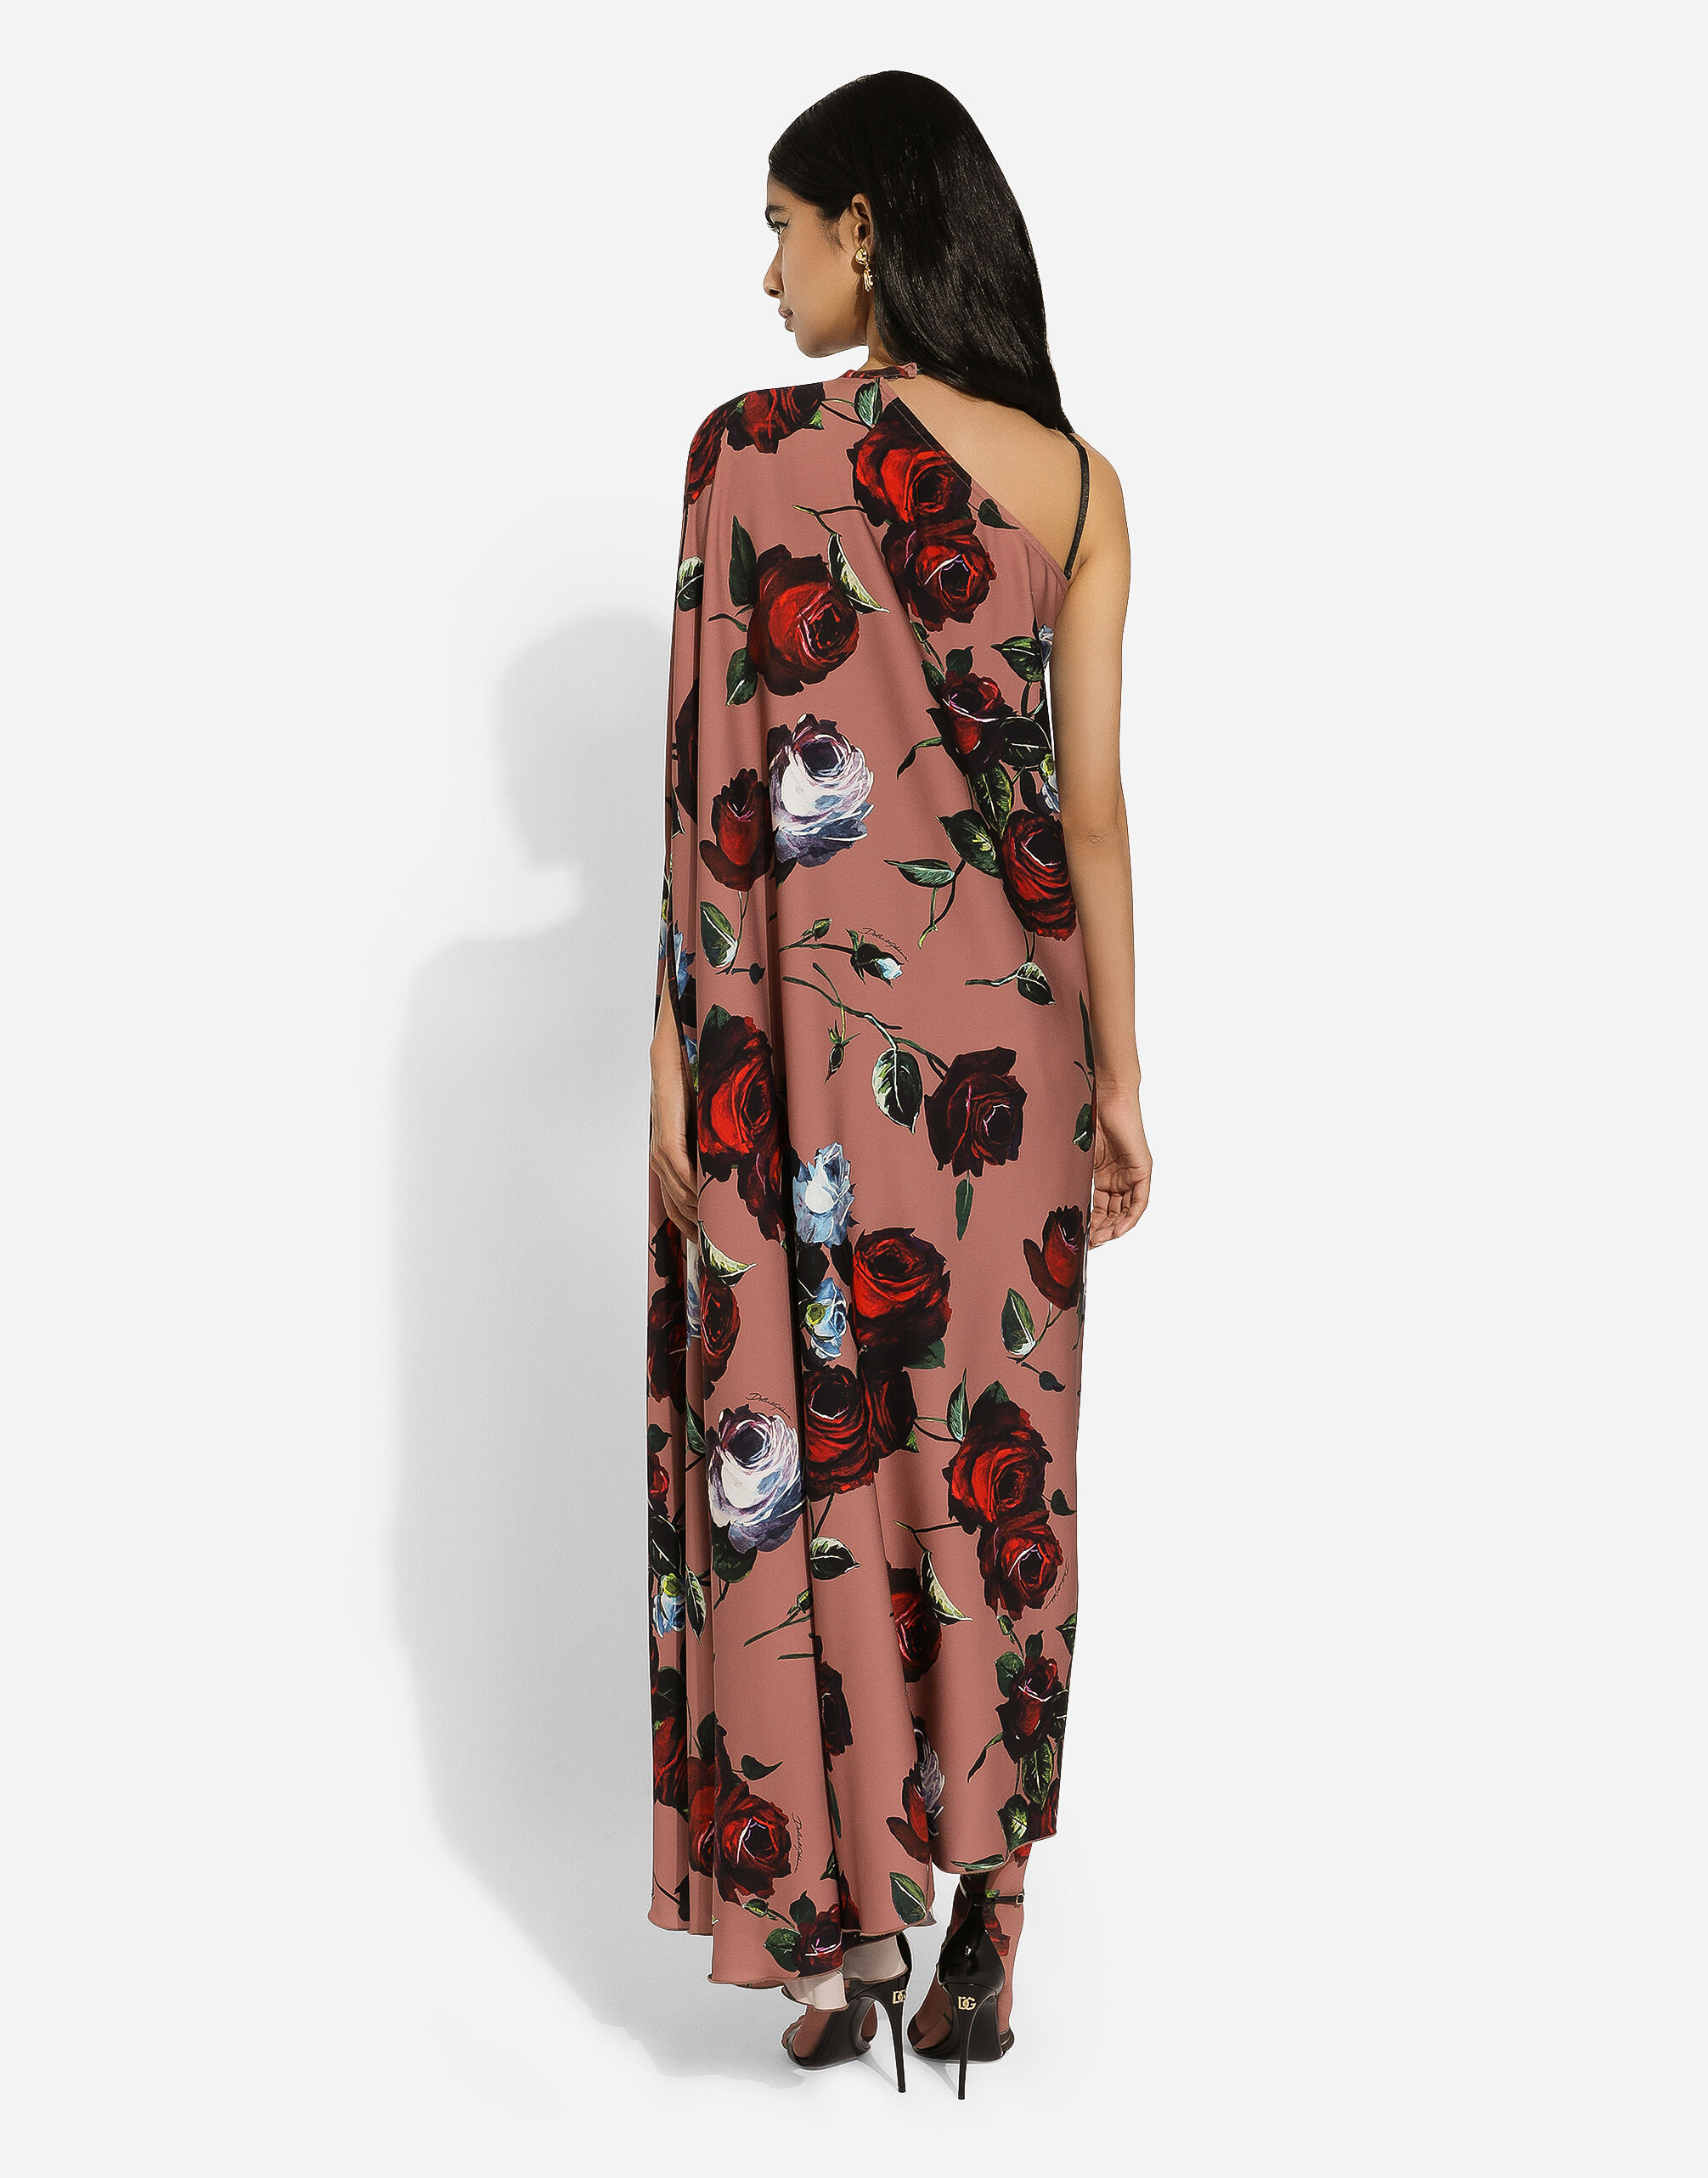 Asymmetrical charmeuse dress with vintage rose print